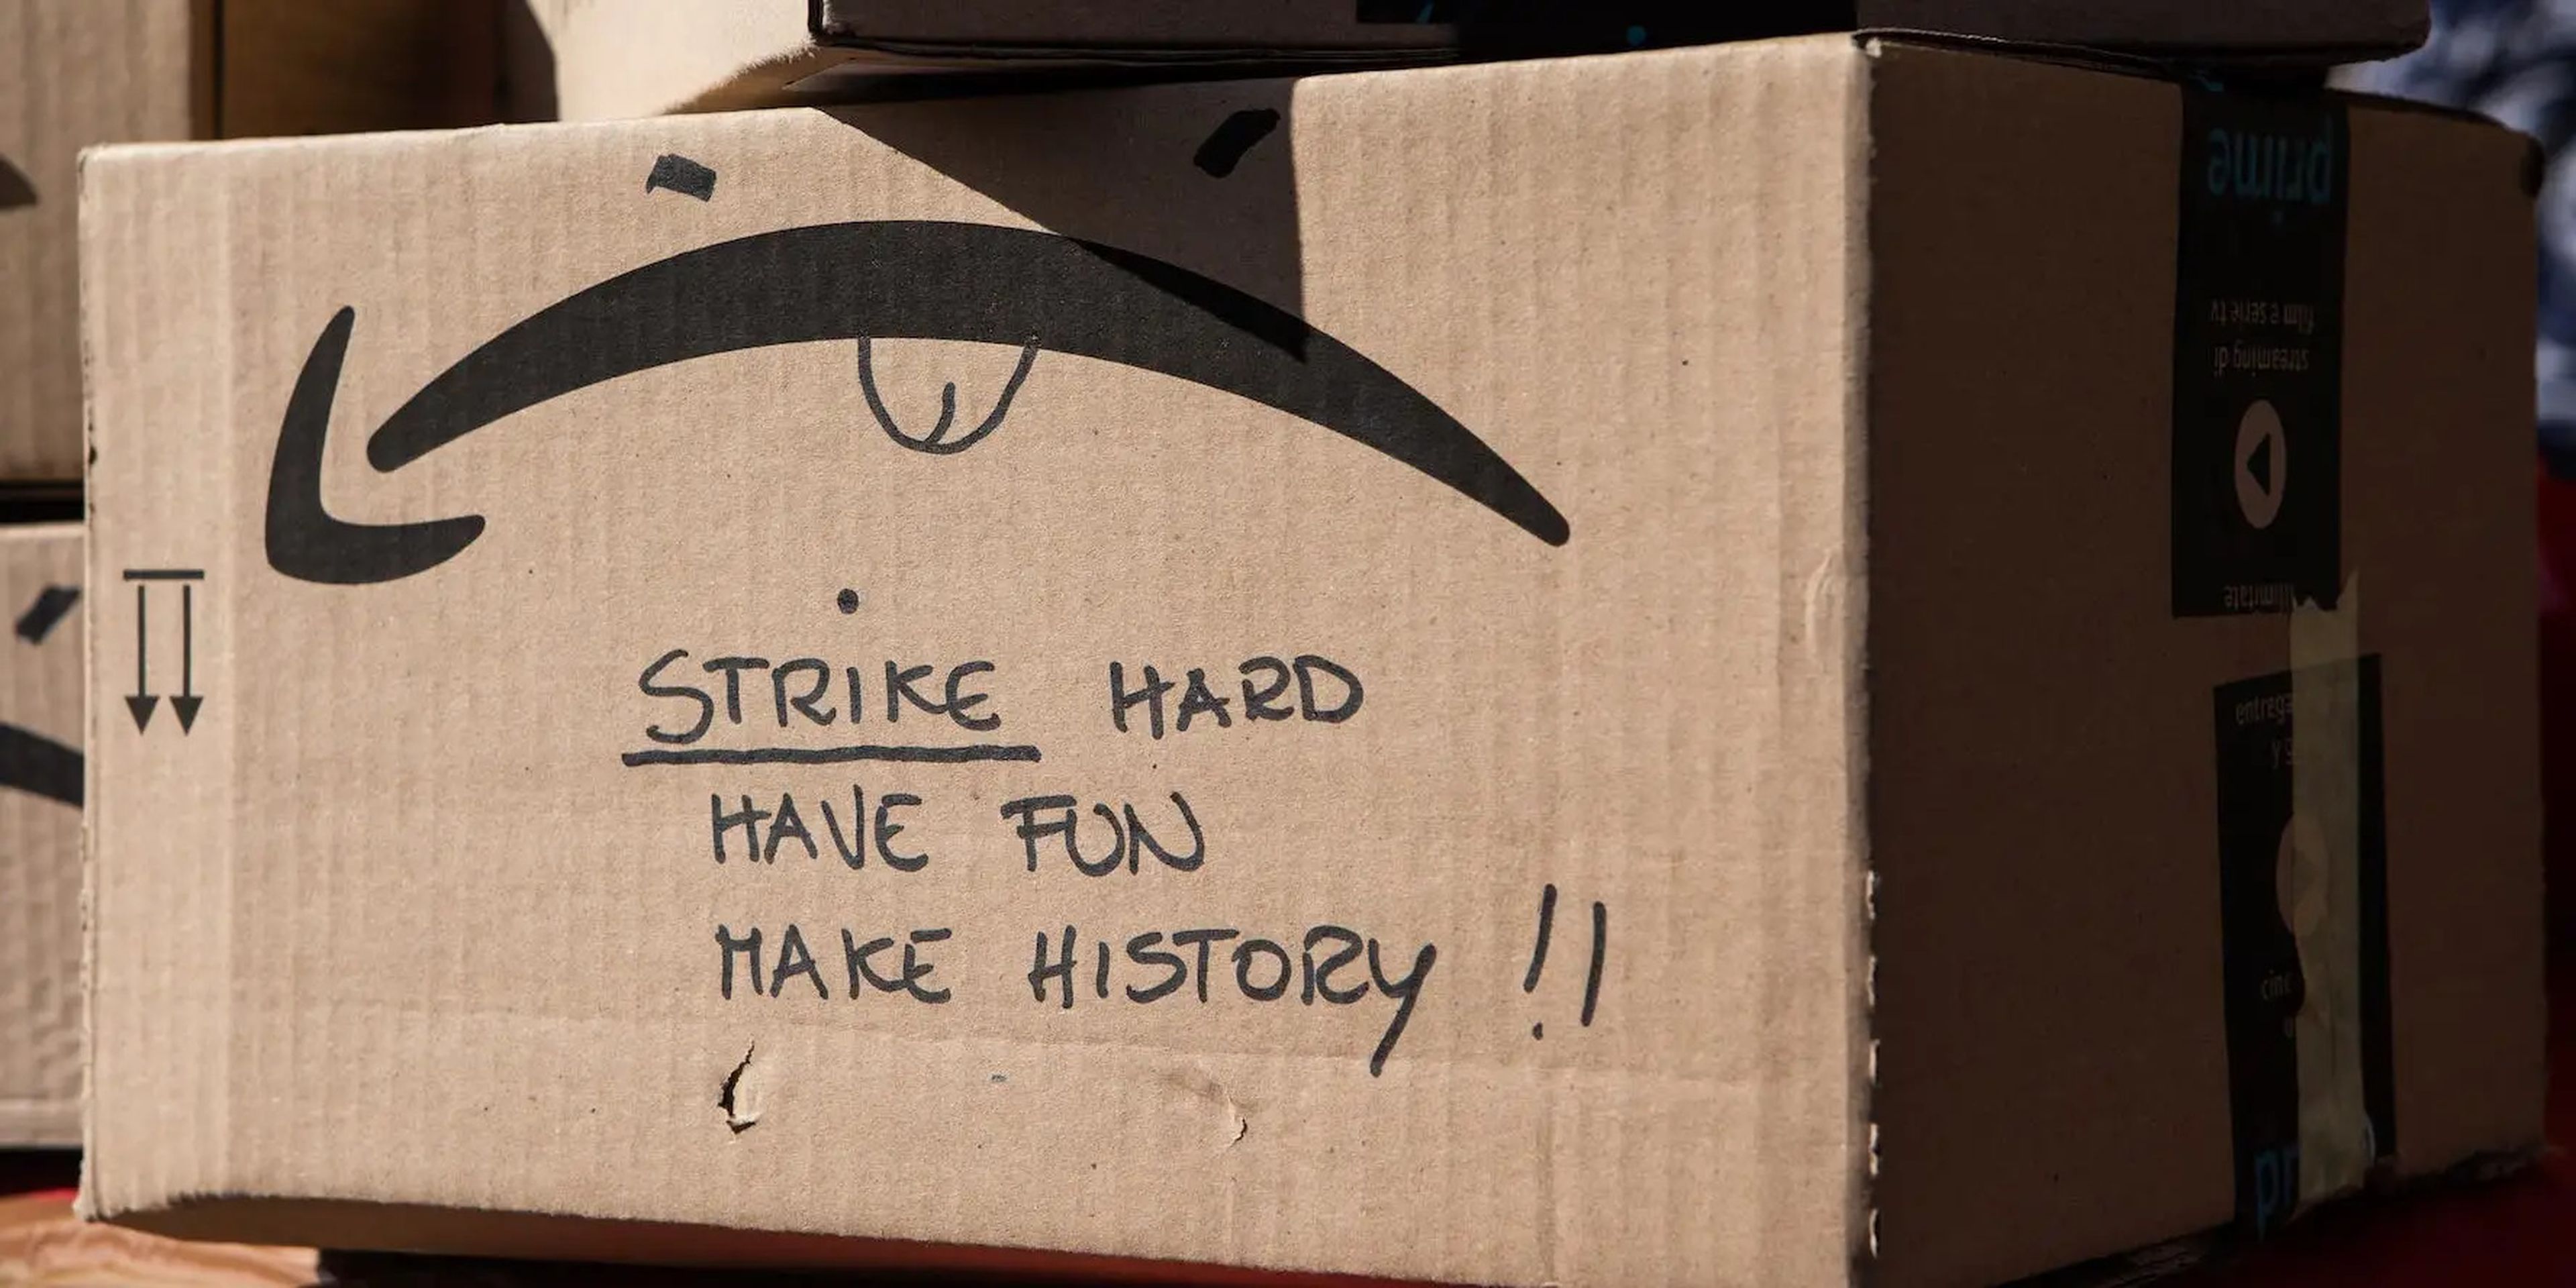 An Amazon box that reads "Strike hard, have fun, make history!"